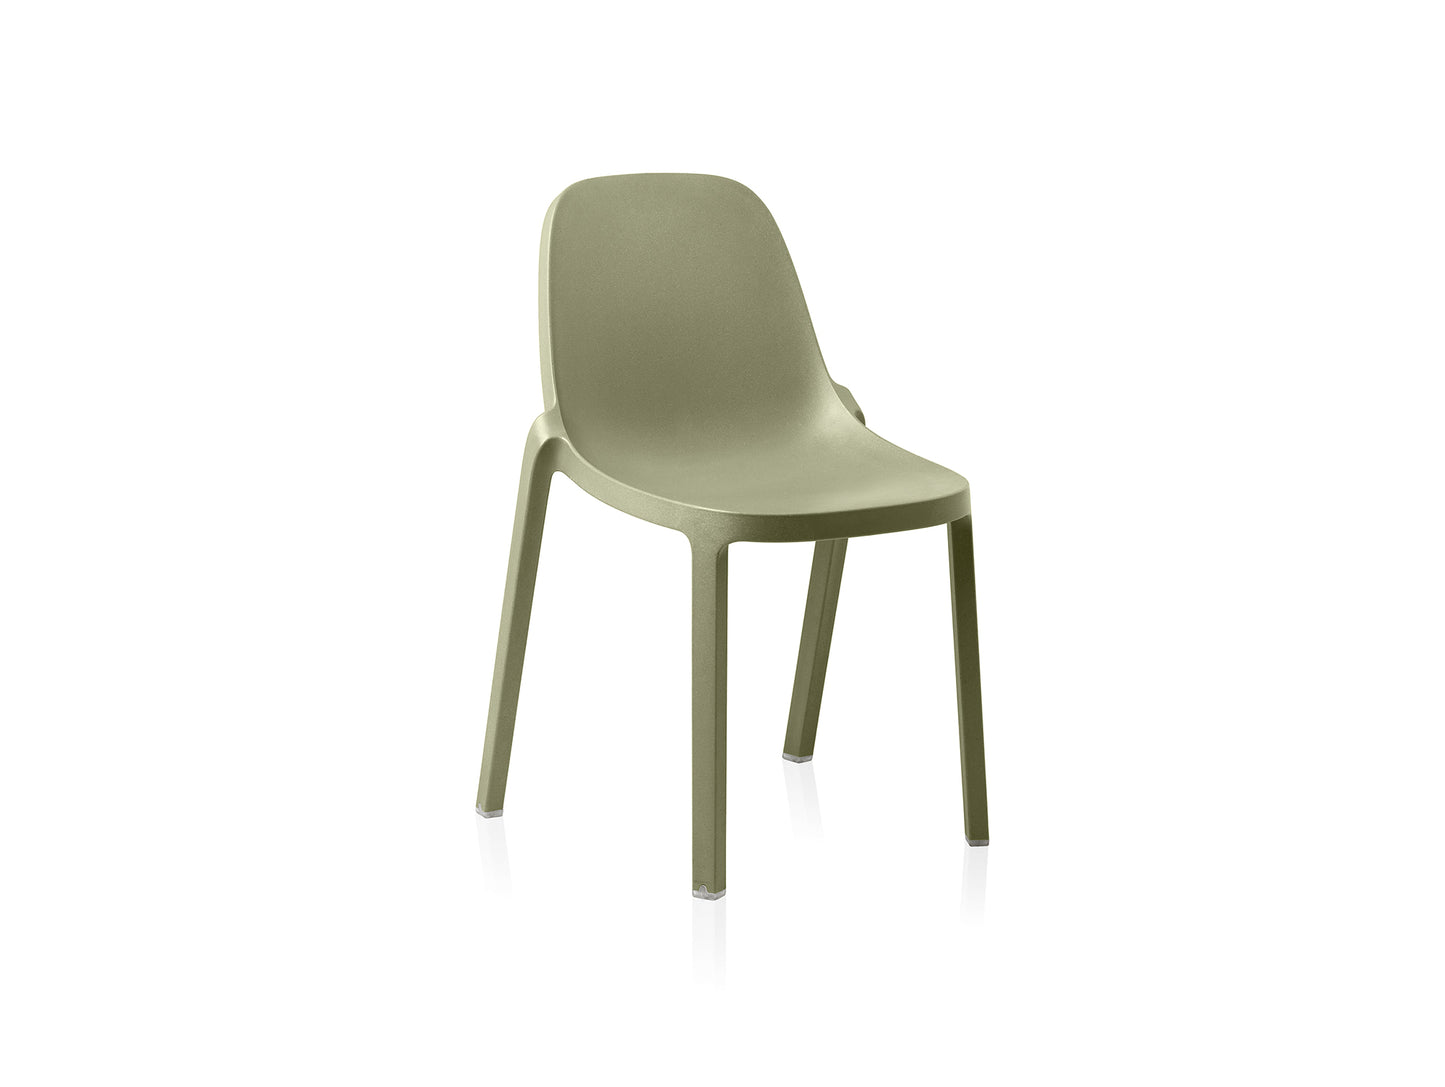 Emeco  Broom Stacking Chair - Sage Green